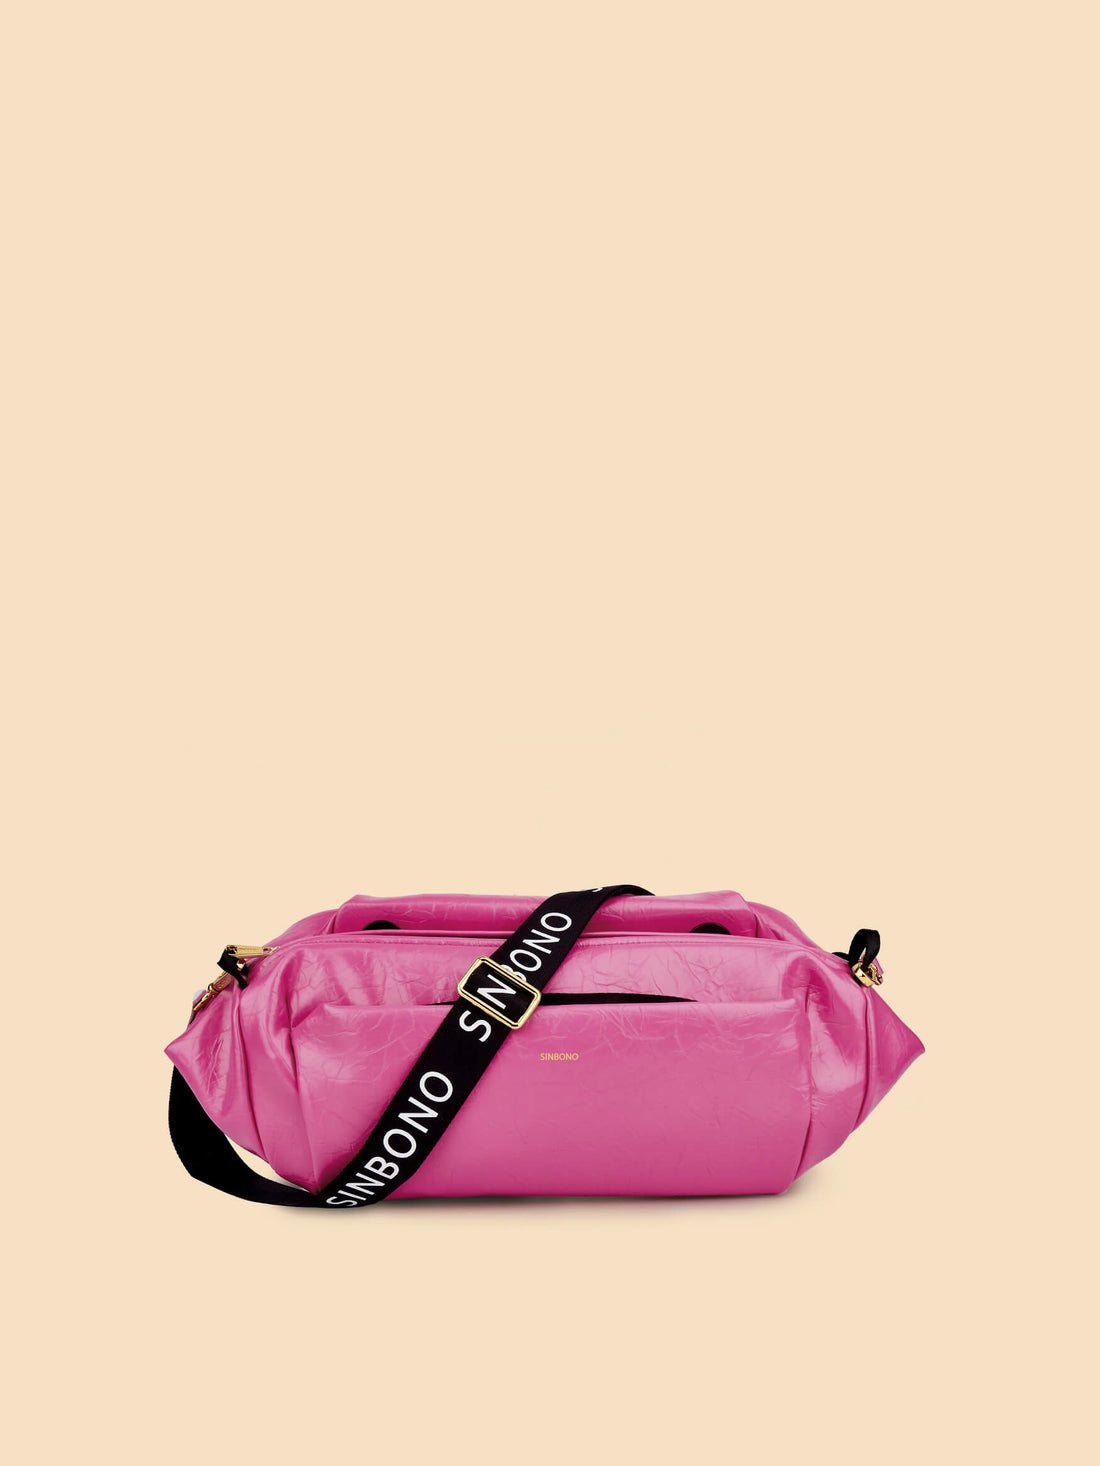 Ecozen Multi-Purpose Yogi  Bag  - Bright Pink